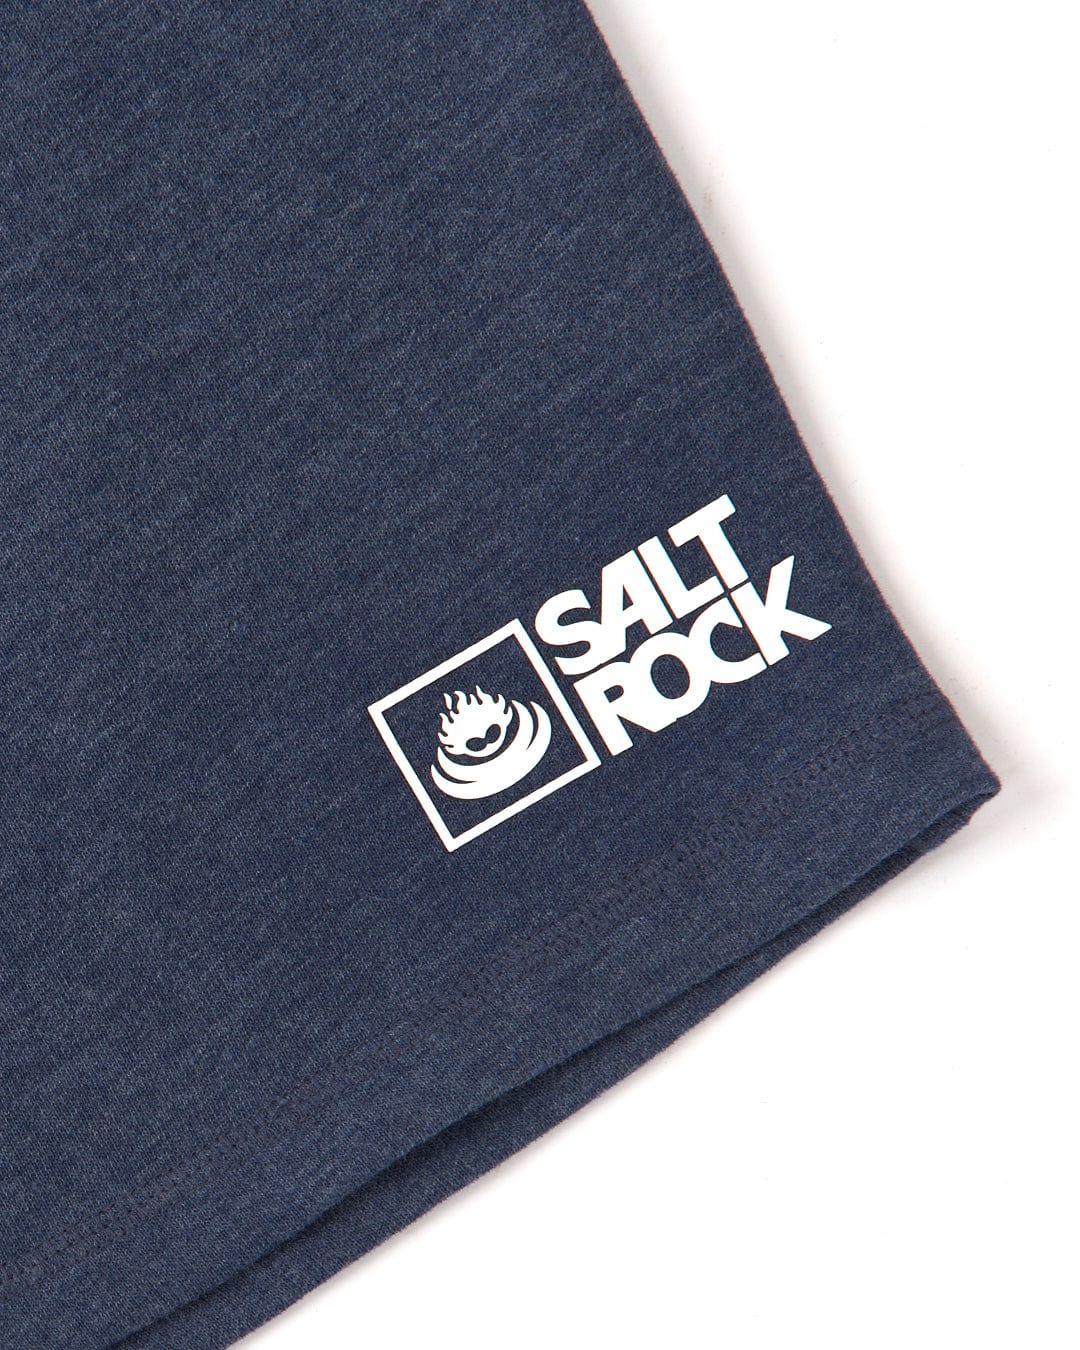 The comfortable Saltrock logo on a Saltrock Original - Mens Short - Blue Marl t-shirt.